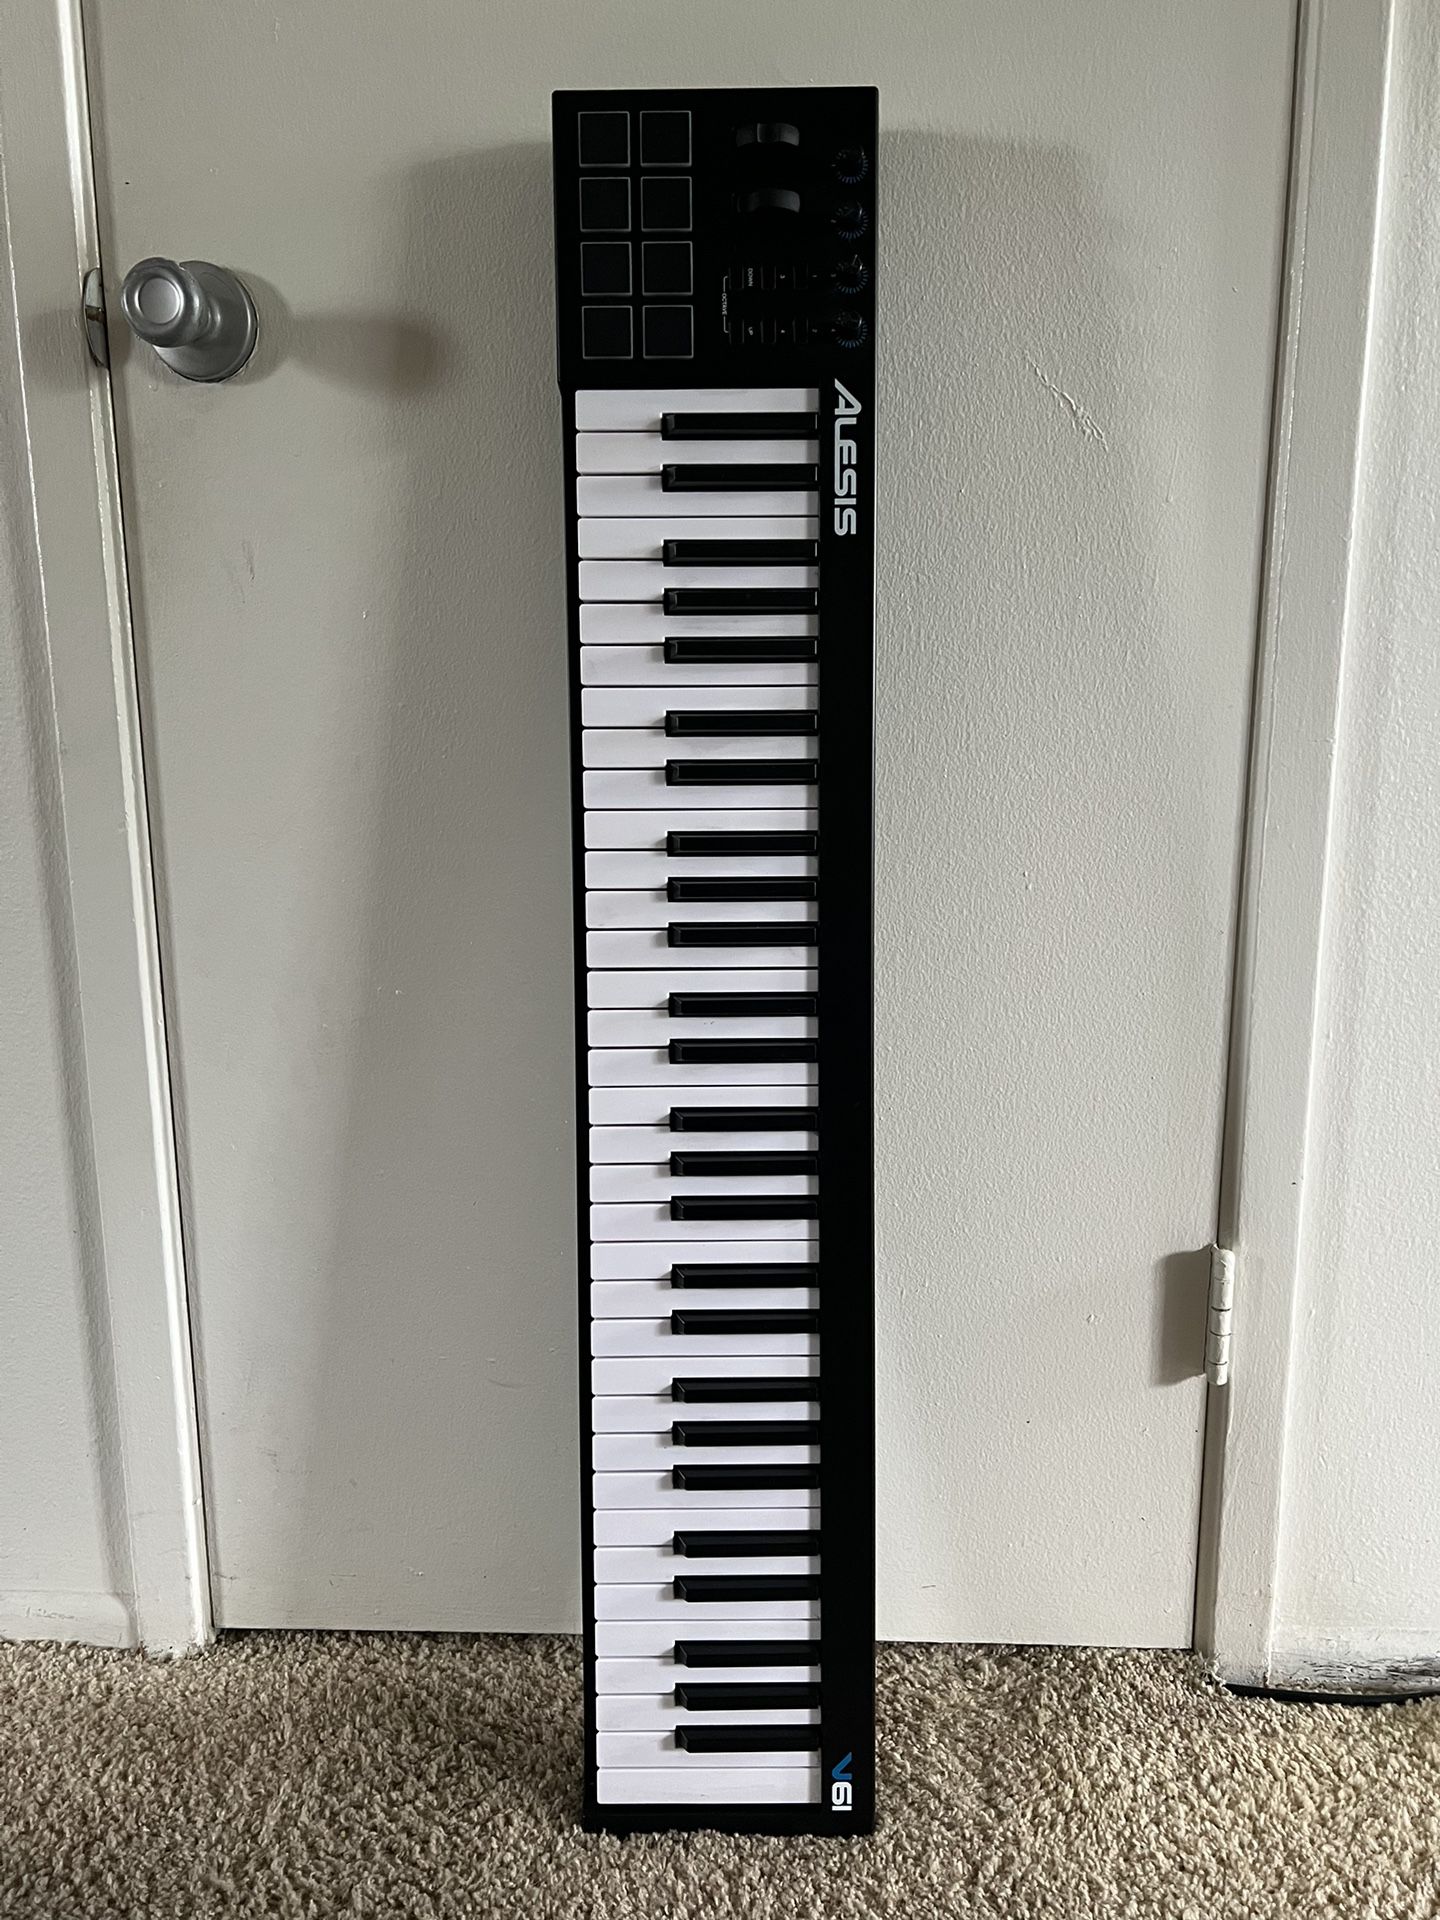 MIDI Keyboard Alesis V61